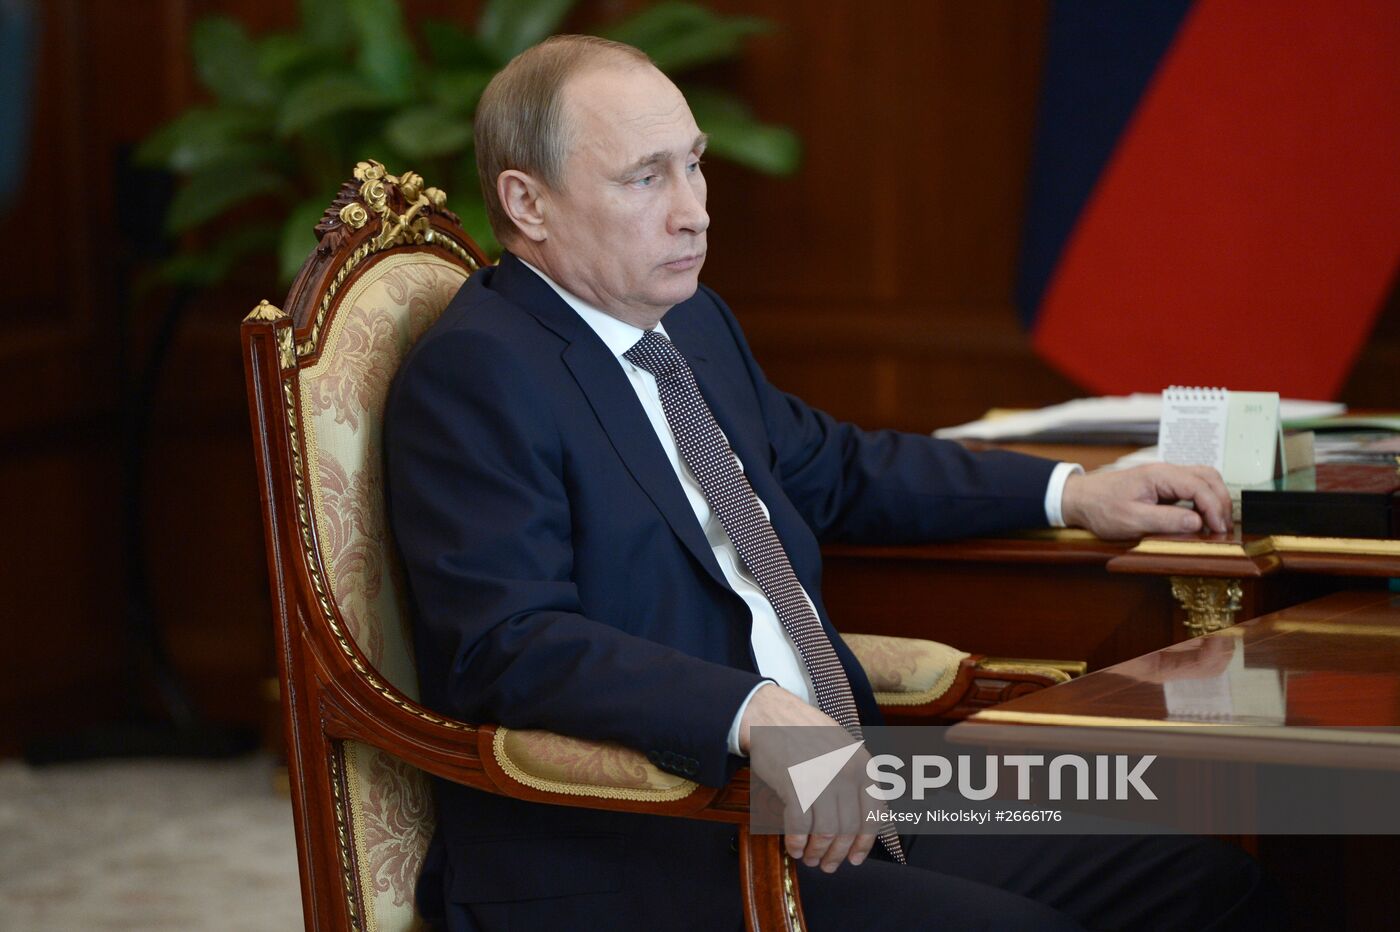 Russian President Vladimir Putin's meeting with Liberal Democratic Party leader Vladimir Zhirinovsky